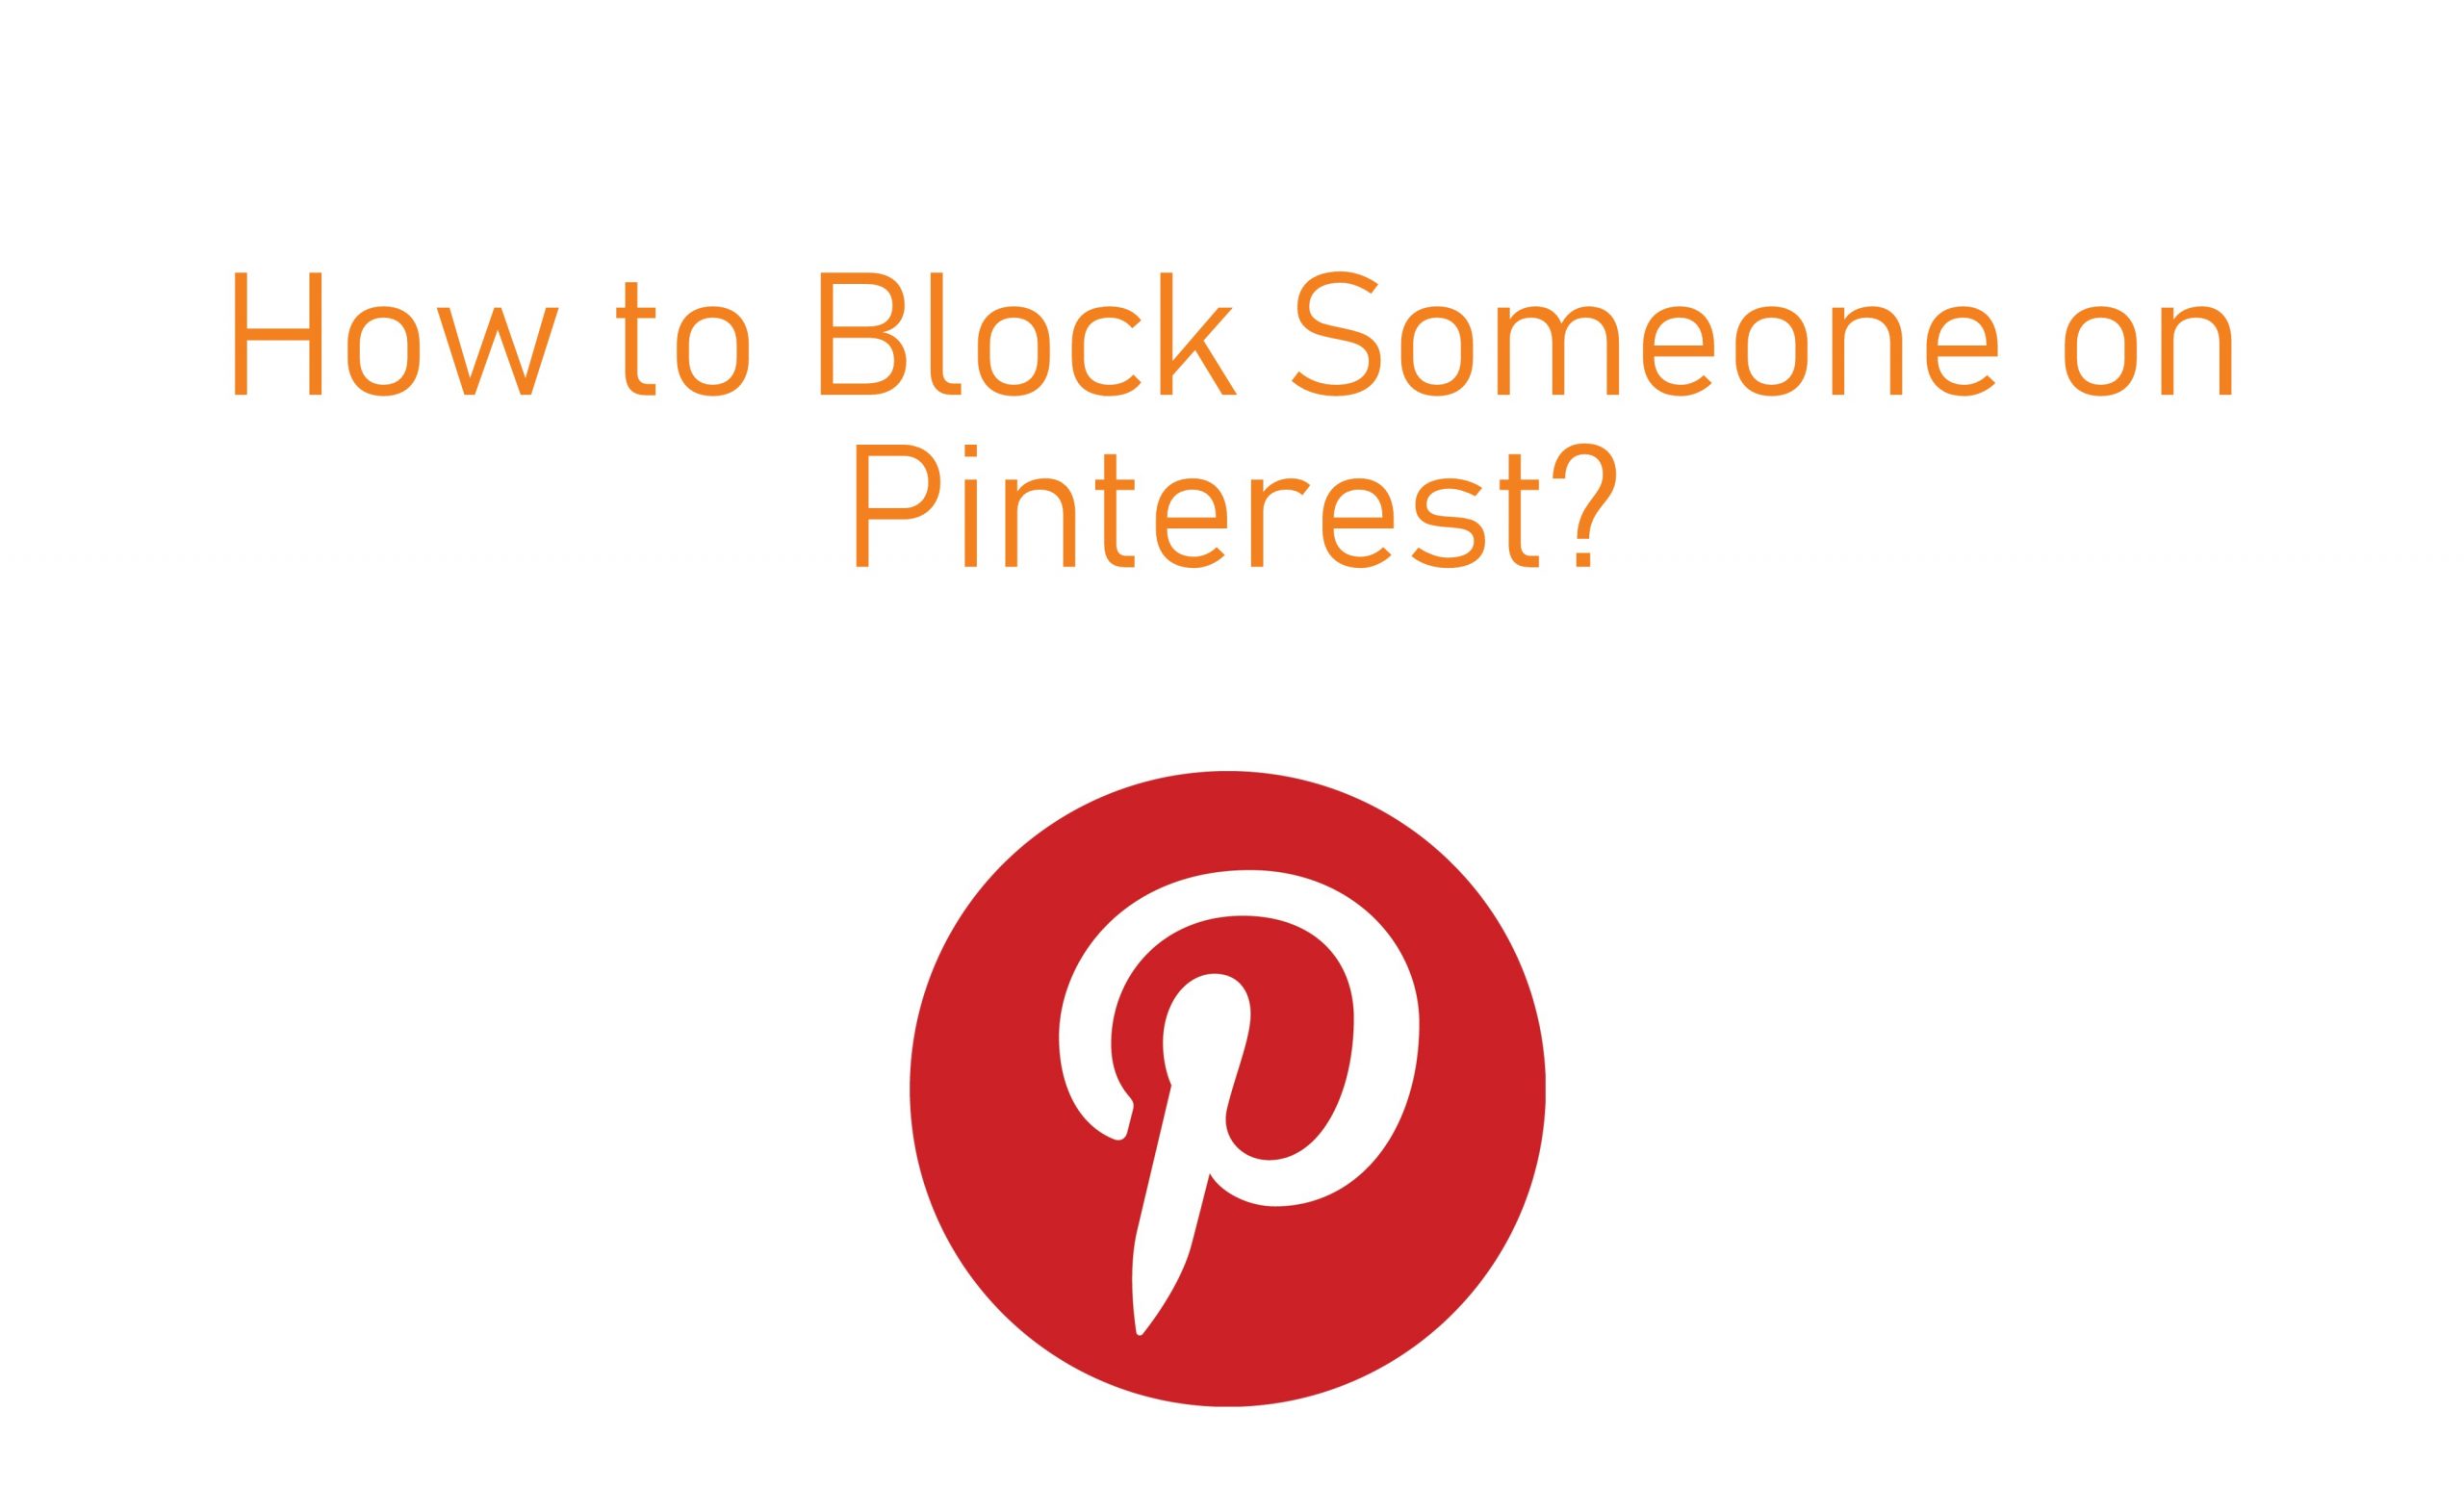 Norbaiti nola blokeatu Pinterest [Step by Step]
